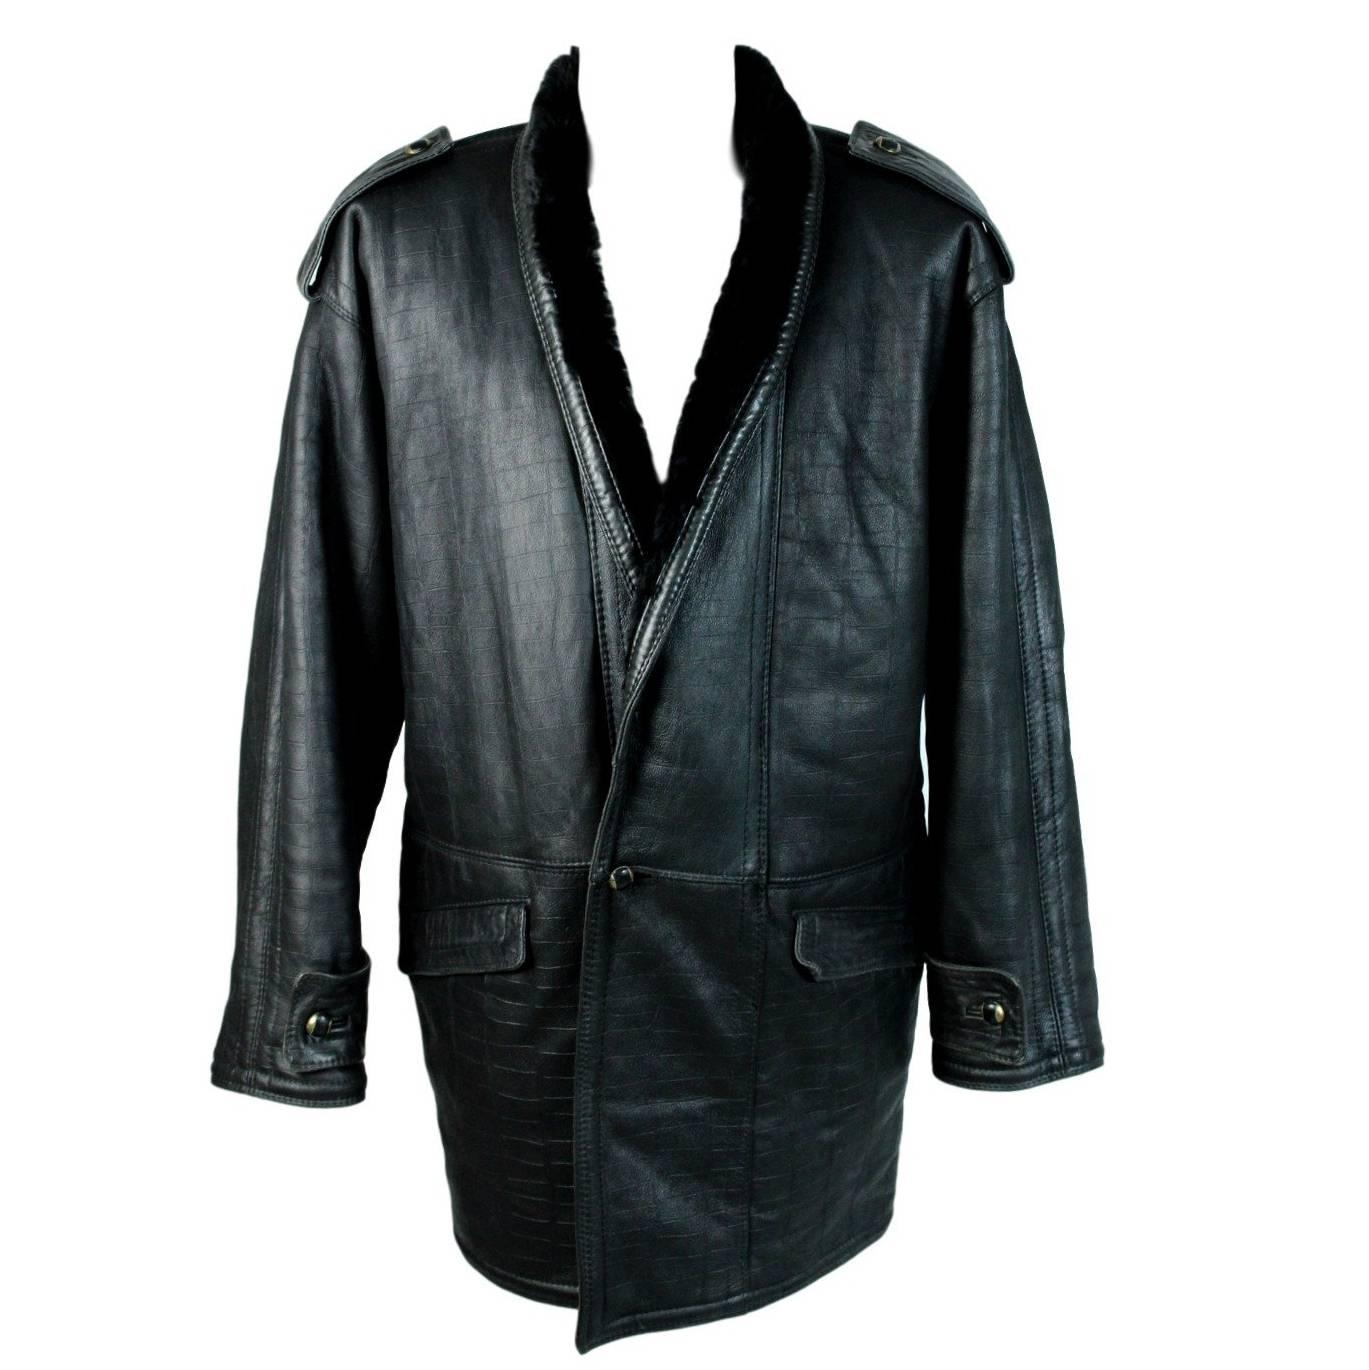 Gianni Versace 1980s leather jacket men's motorcycle shearling coat black luxury